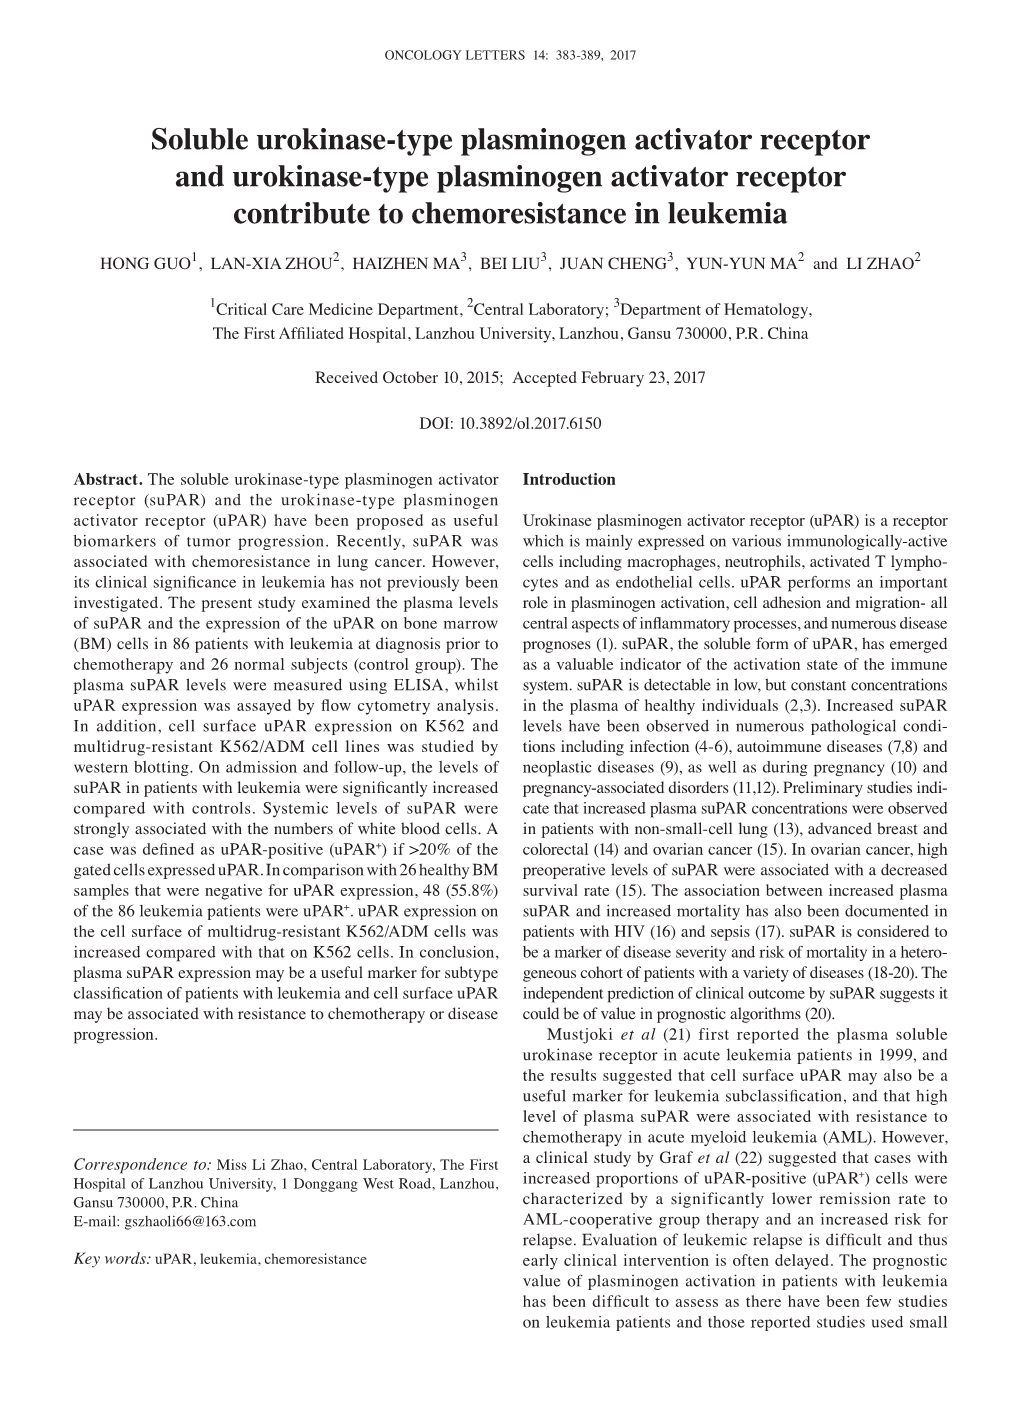 Soluble Urokinase‑Type Plasminogen Activator Receptor and Urokinase‑Type Plasminogen Activator Receptor Contribute to Chemoresistance in Leukemia